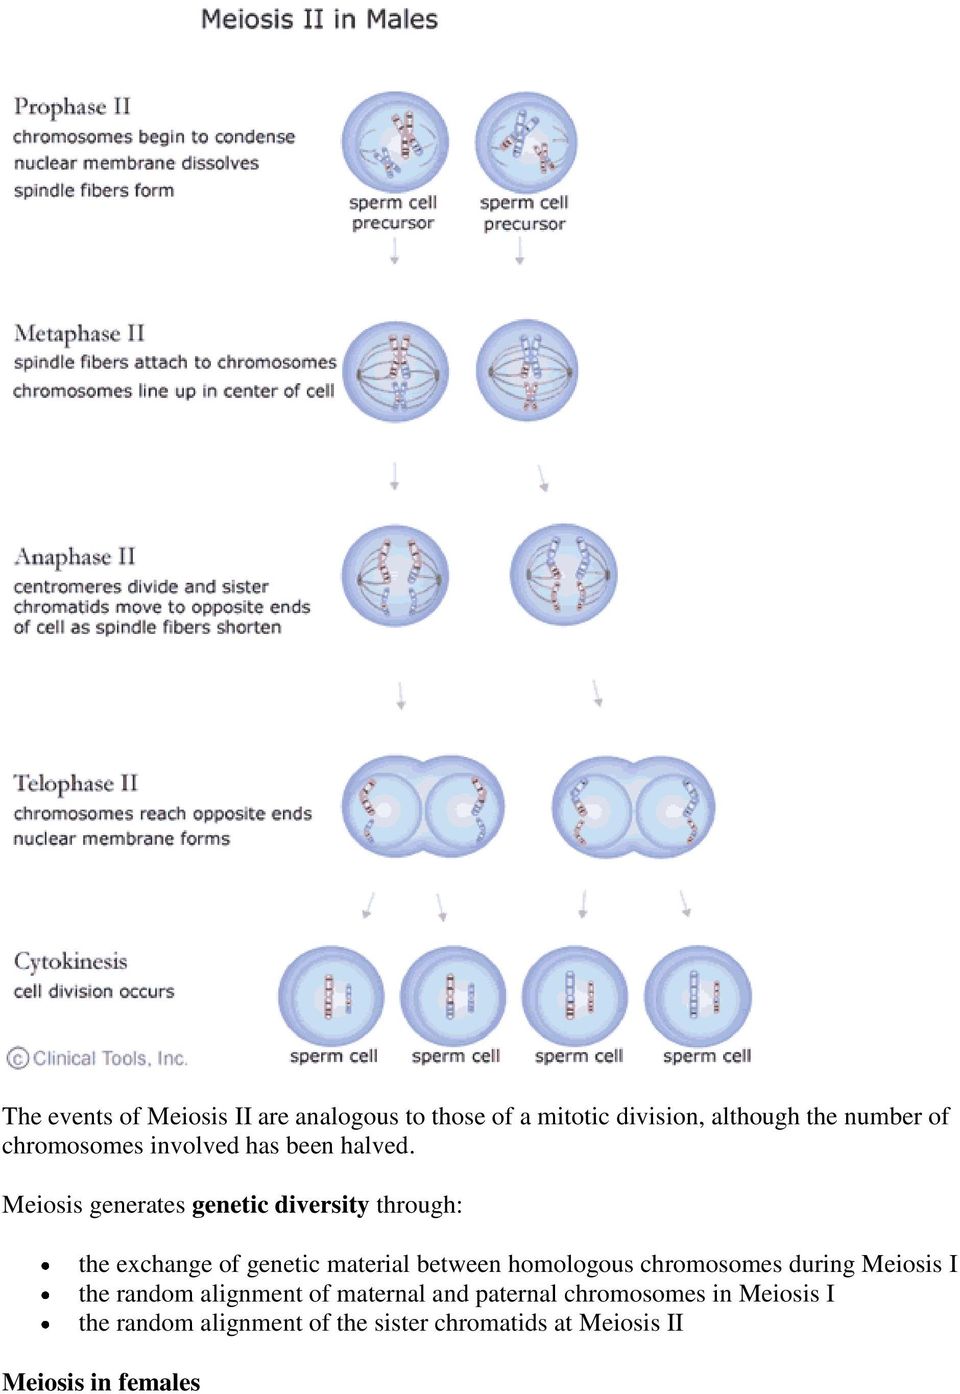 Meiosis generates genetic diversity through: the exchange of genetic material between homologous